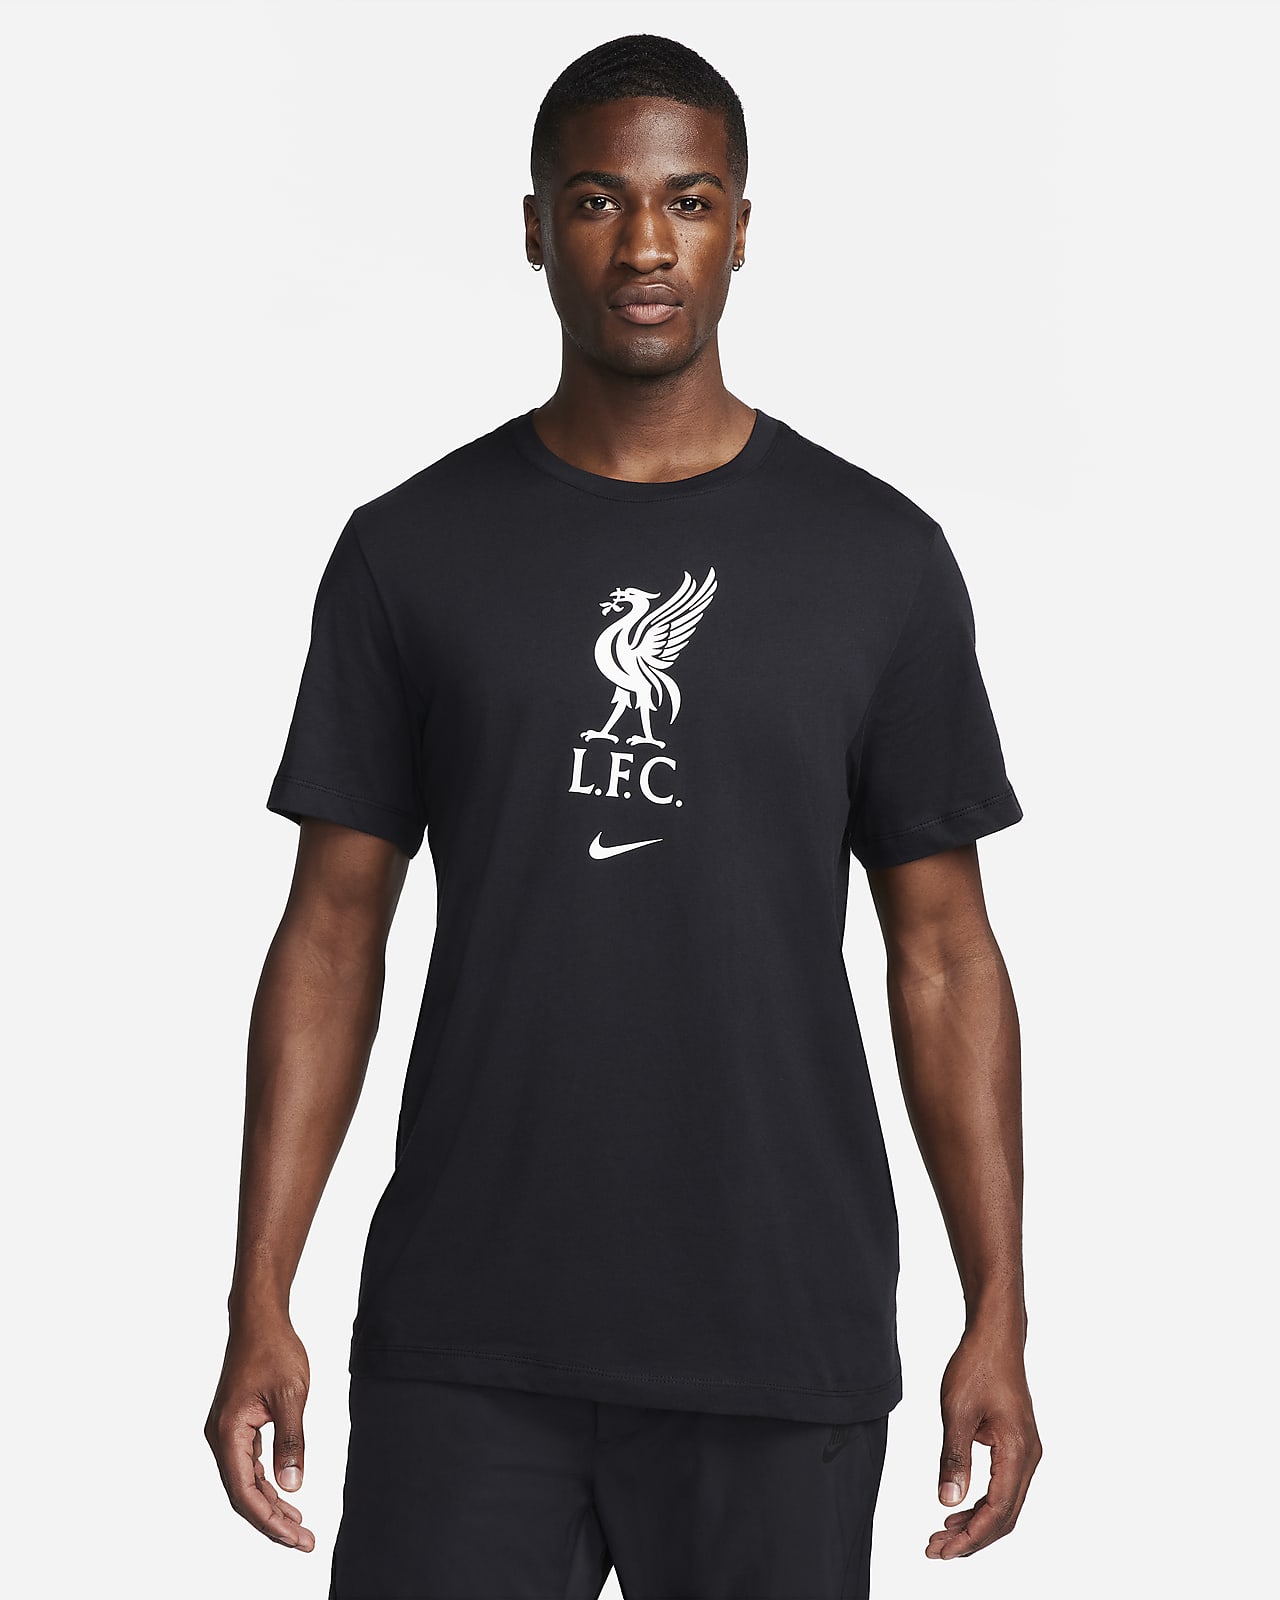 Liverpool F.C. Men's Football T-Shirt